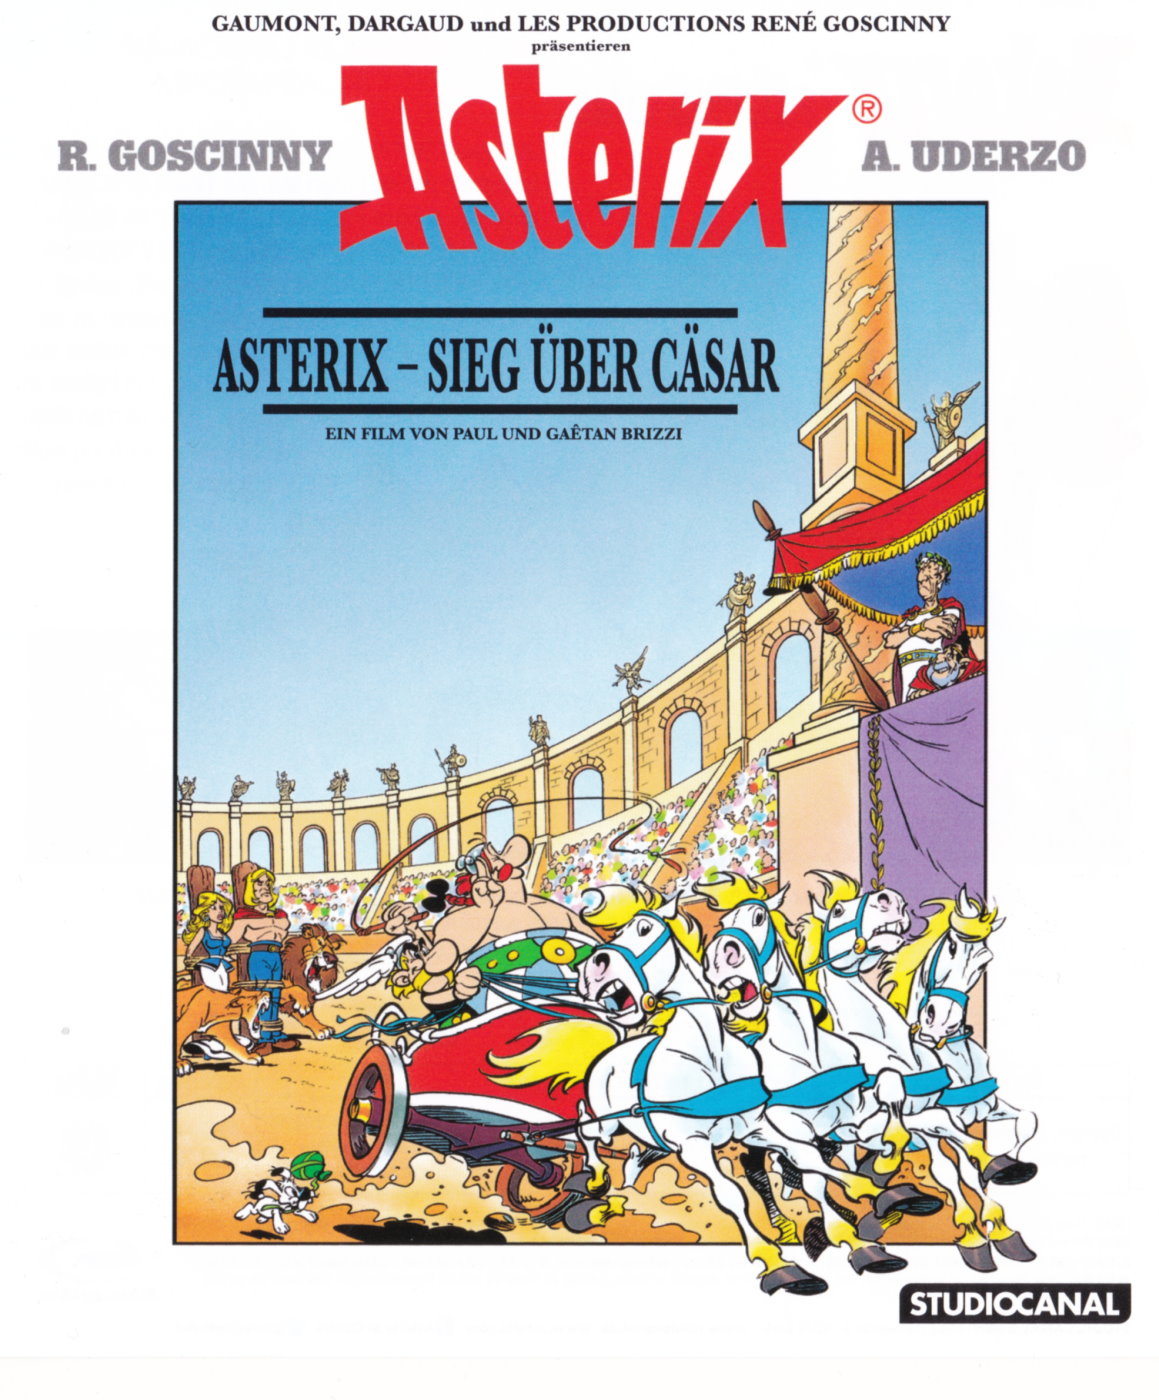 Cover - Asterix - Sieg über Cäsar.jpg